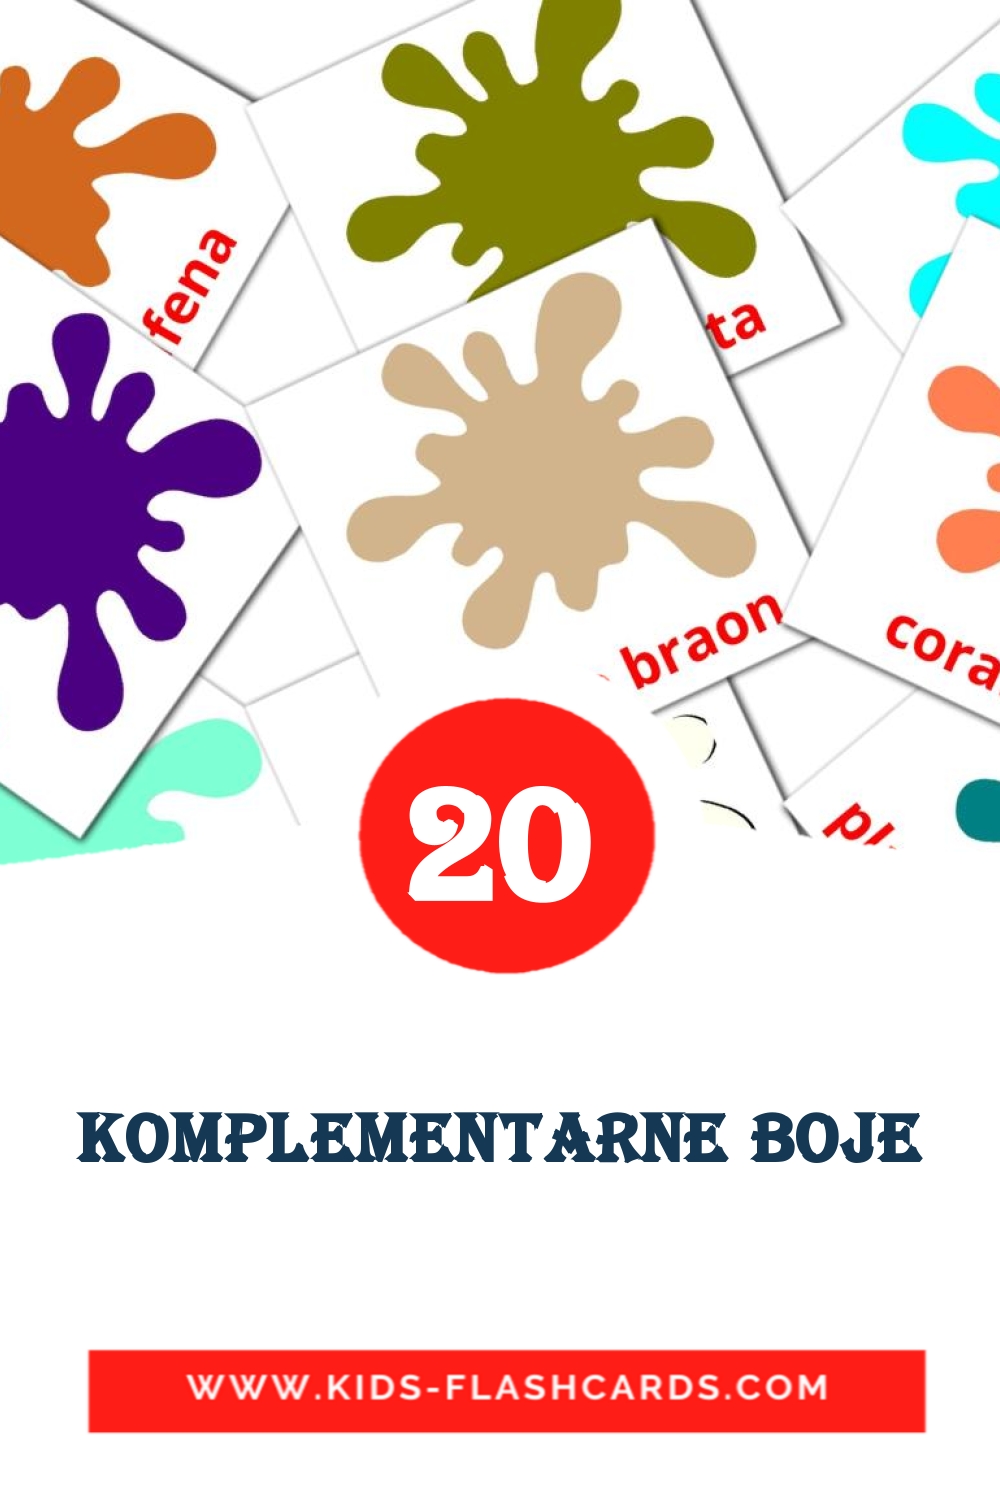 20 Komplementarne boje Picture Cards for Kindergarden in serbian